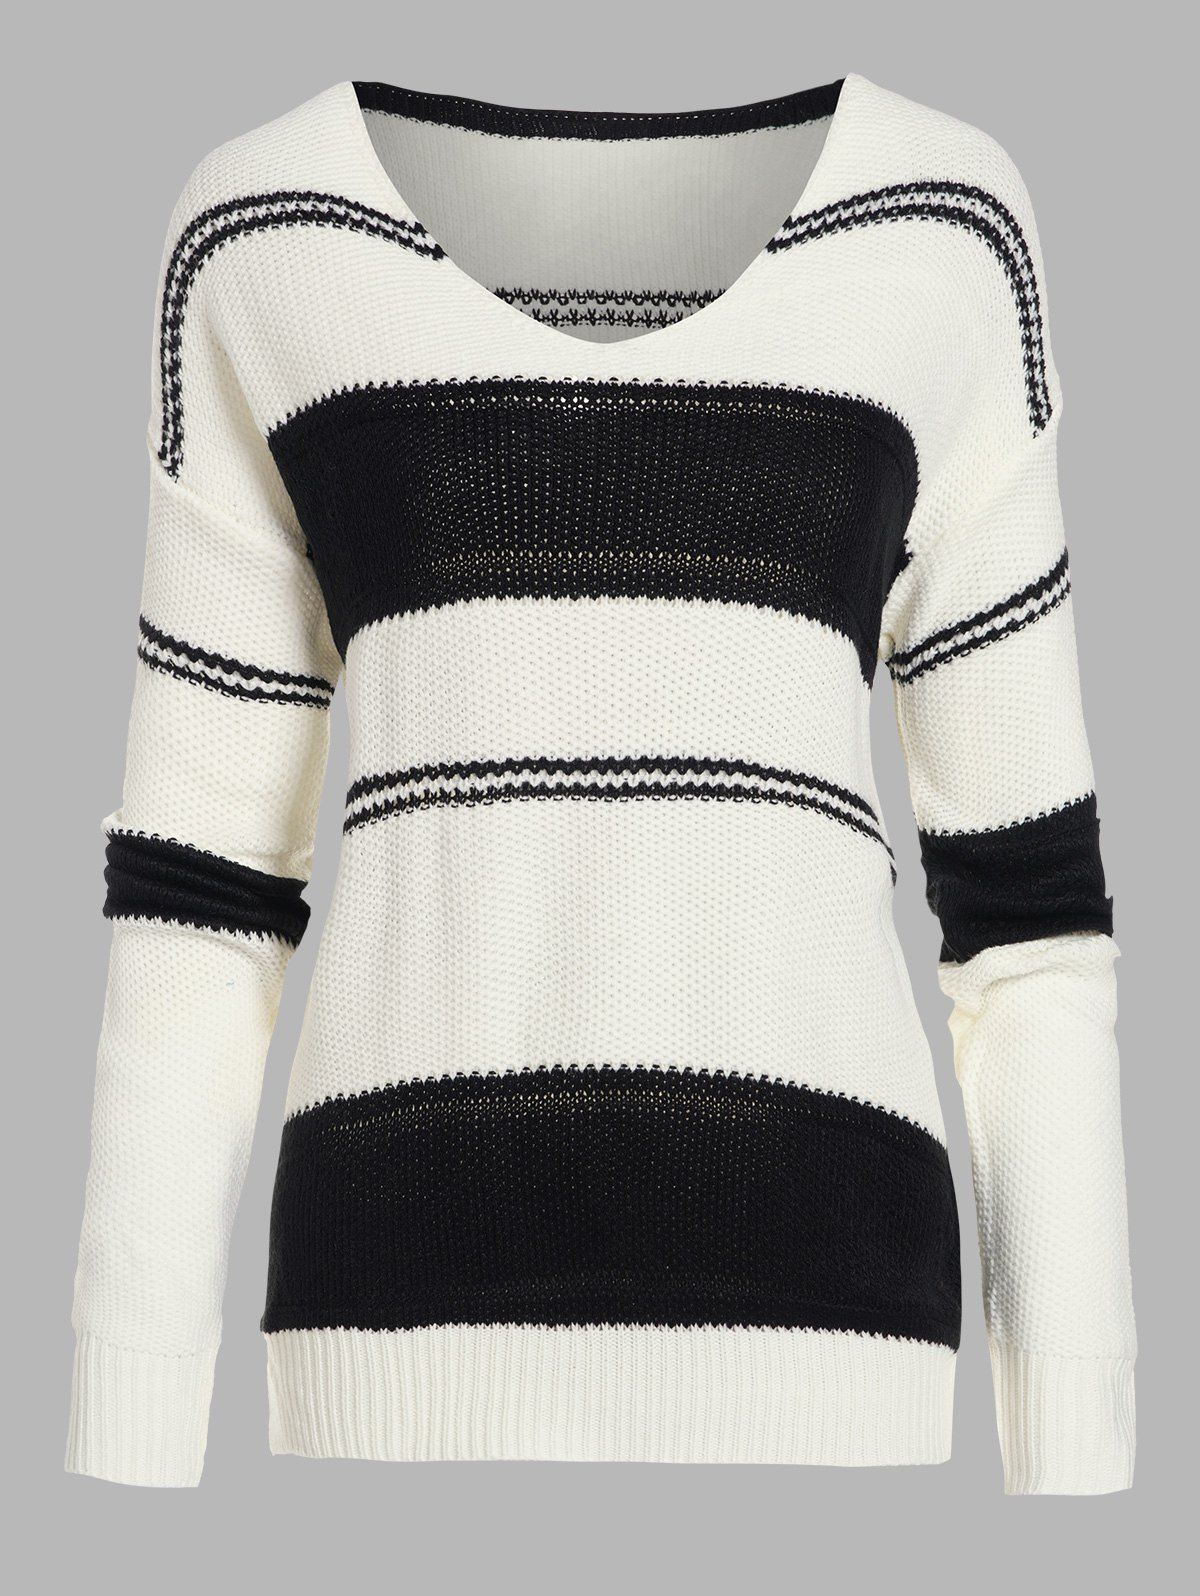 Two Tone Stripe V Neck Sweater - BLACK L